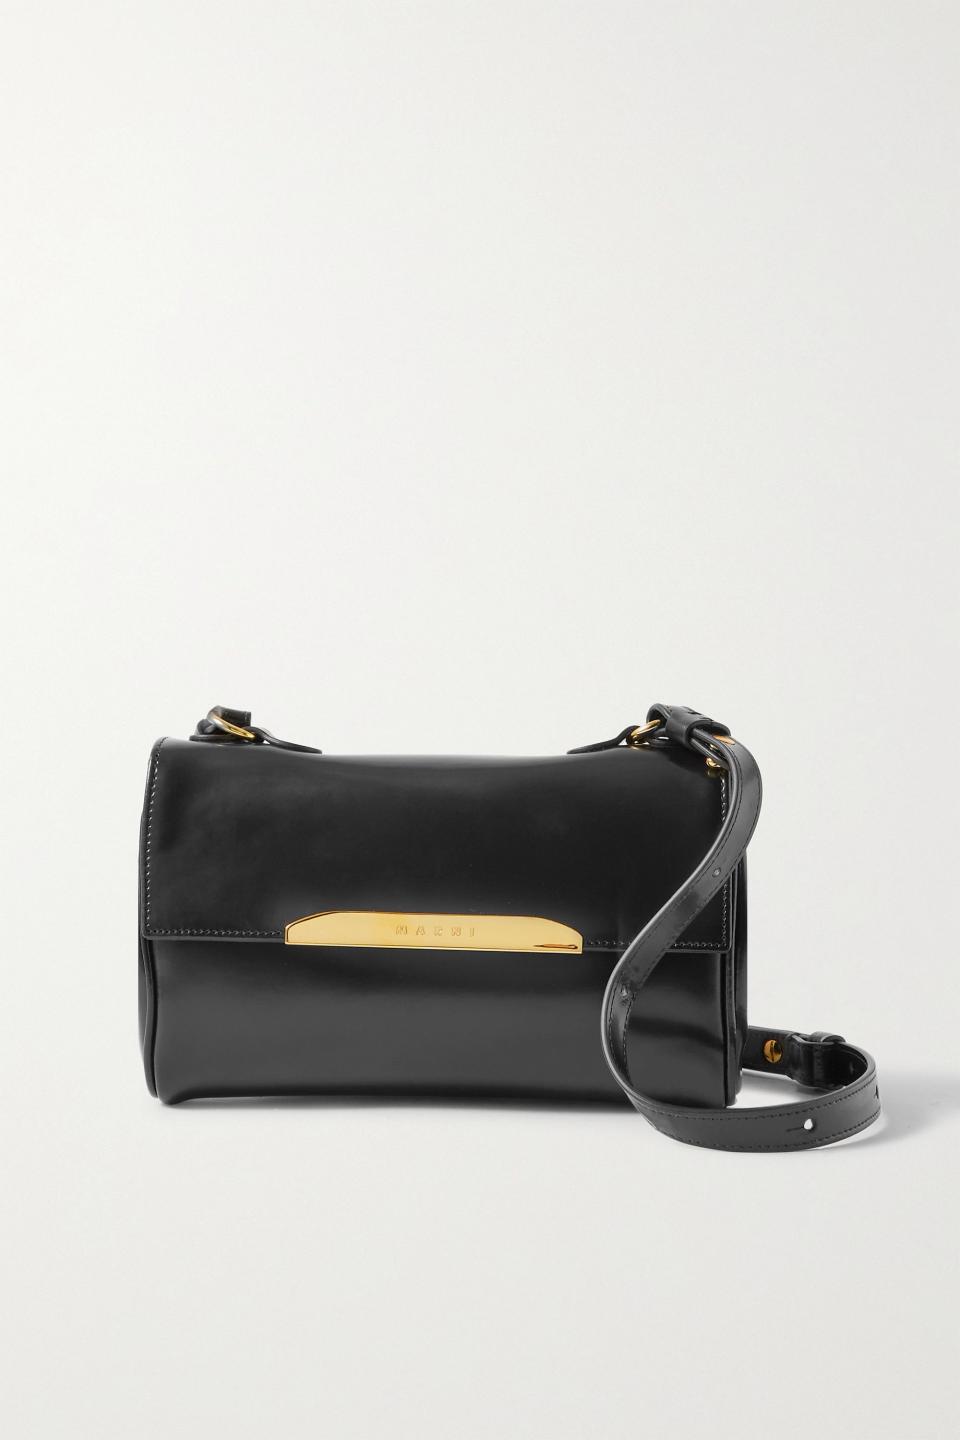 8) Corinne Mini Leather Shoulder Bag